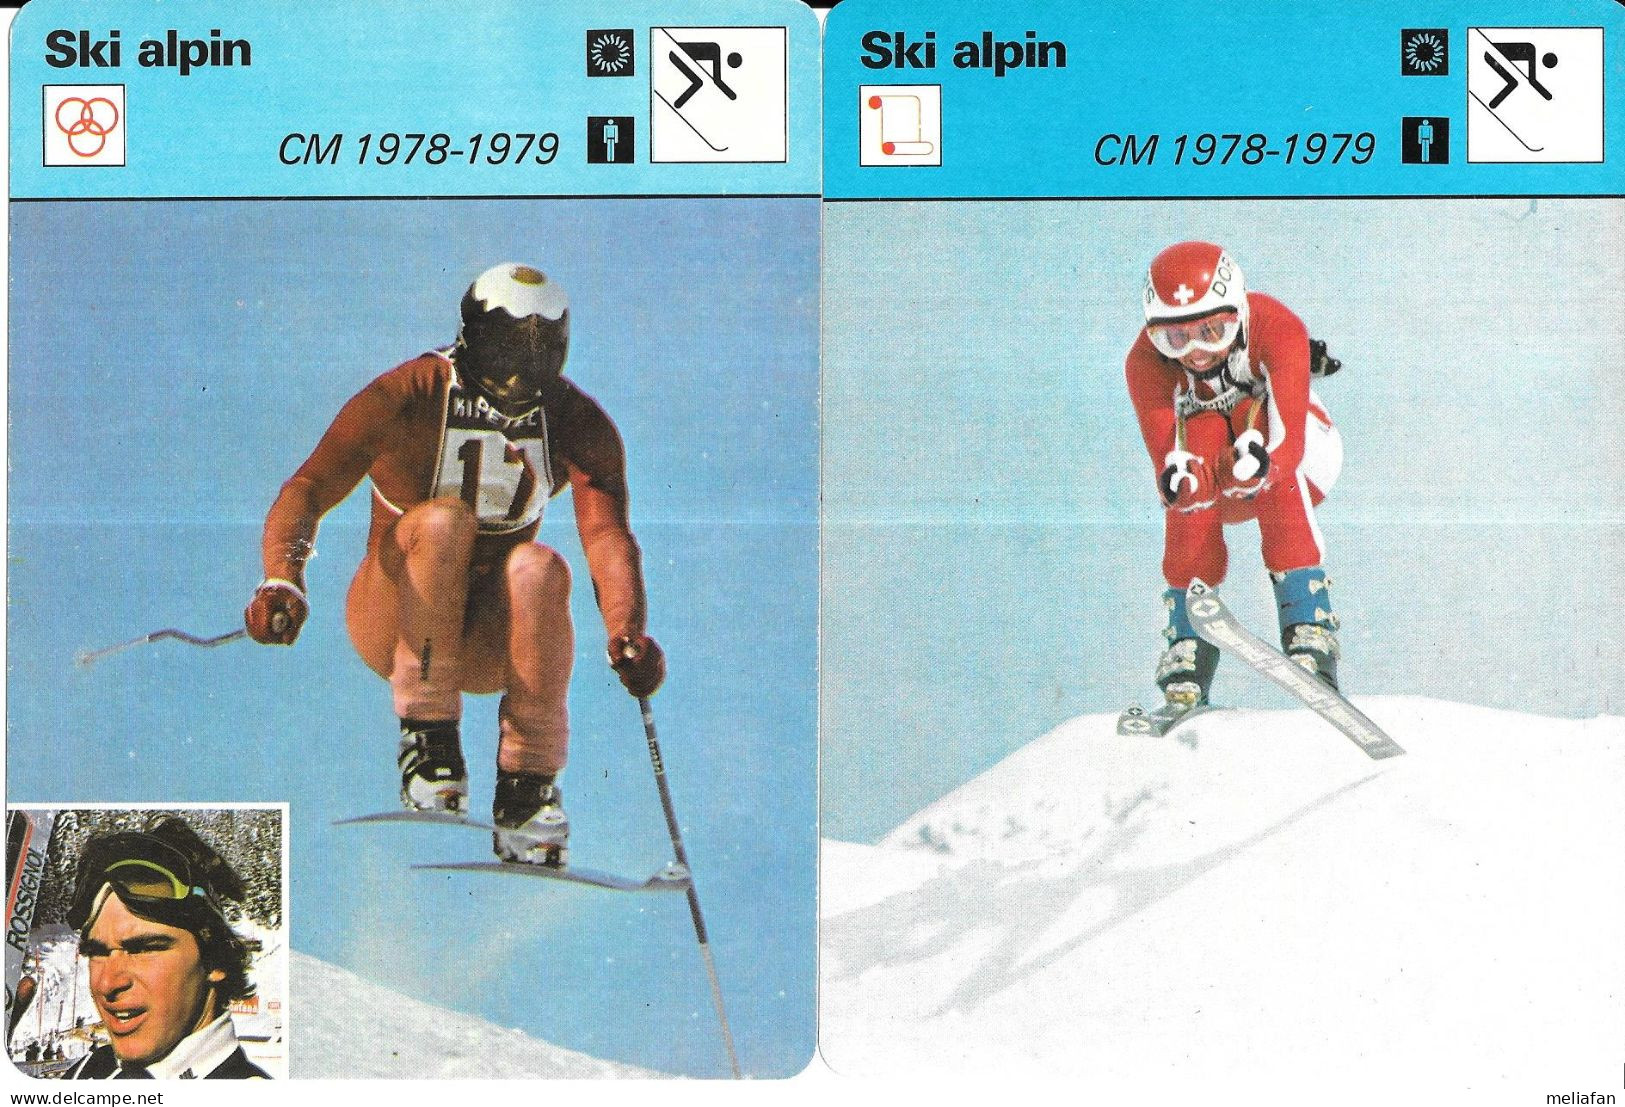 GF1915 - FICHES RENCONTRE - PETER LUSCHER - DORIS DE AGOSTINI - HANNI WENZEL - ANNEMARIE MOSER PROELL - Winter Sports